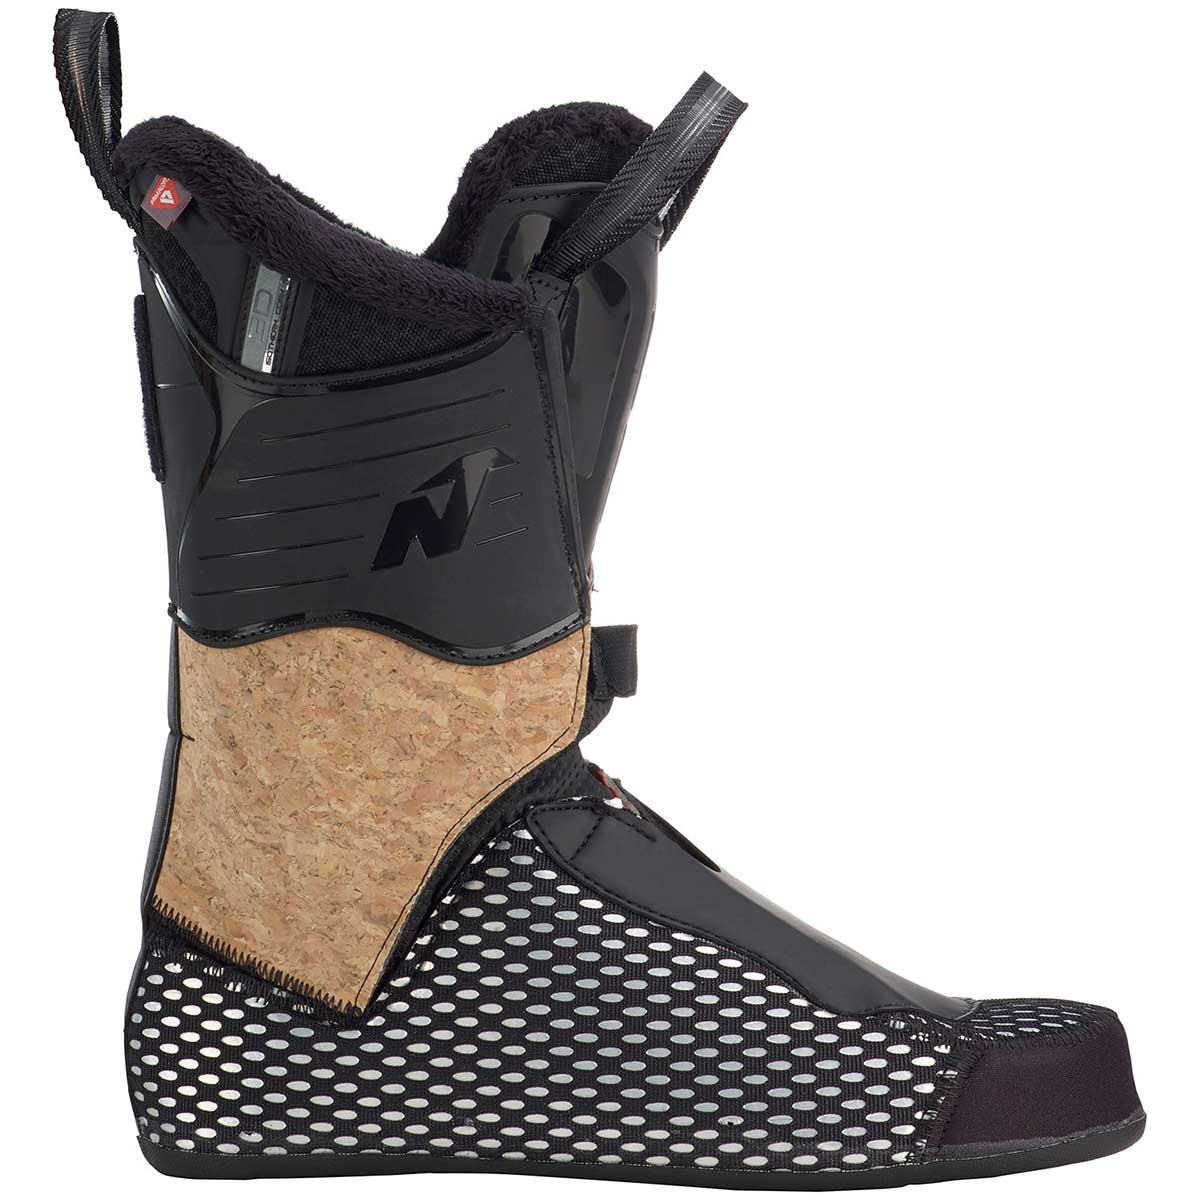 nordica-hf-85-ski-boots-womens-2023